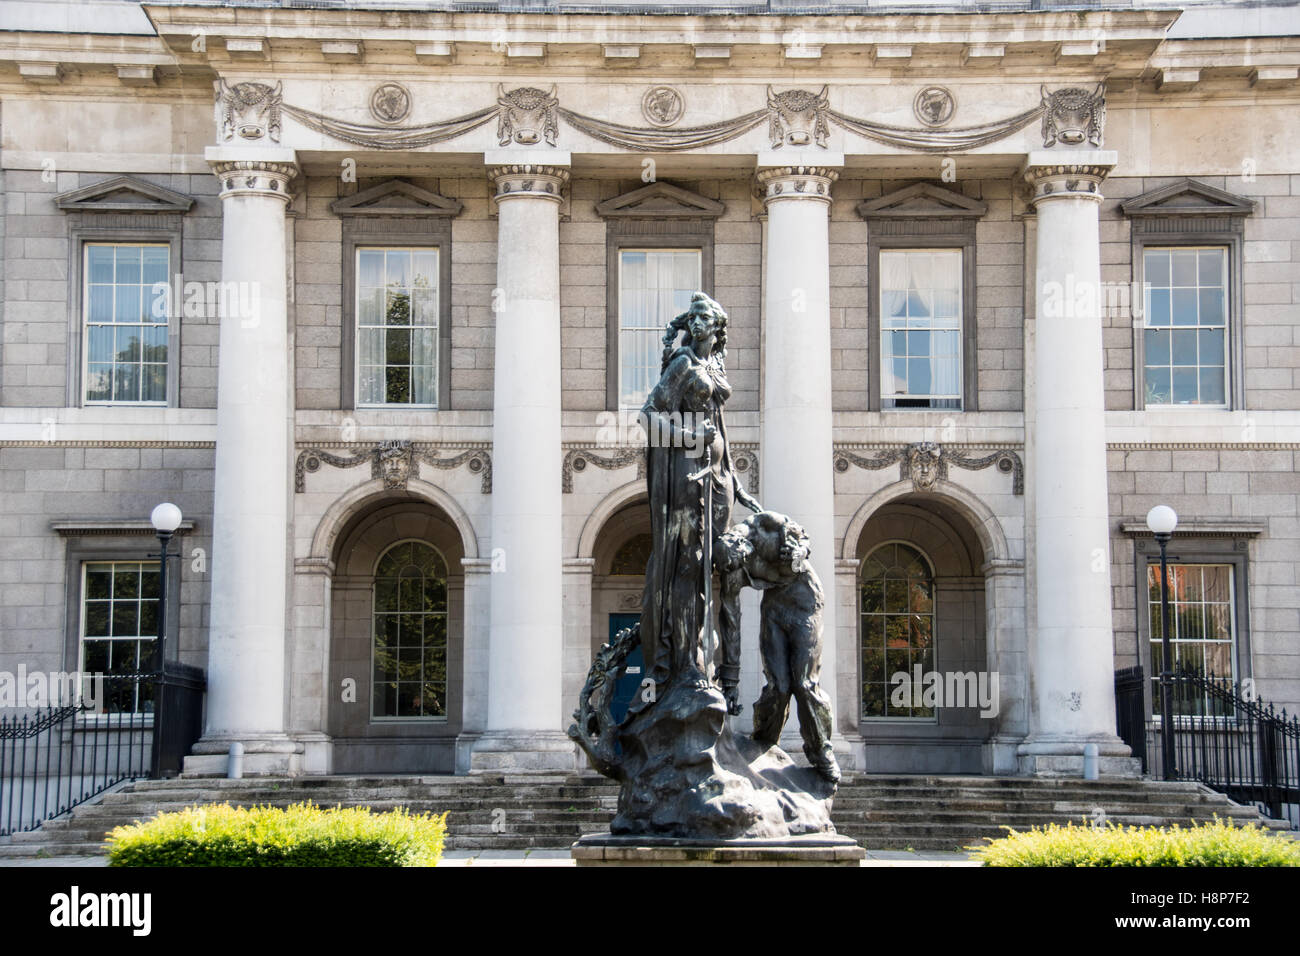 Dublin, Ireland- Sculpture outside of the Custom House, a neoclassical 18th-century building in Dublin, Ireland. Stock Photo